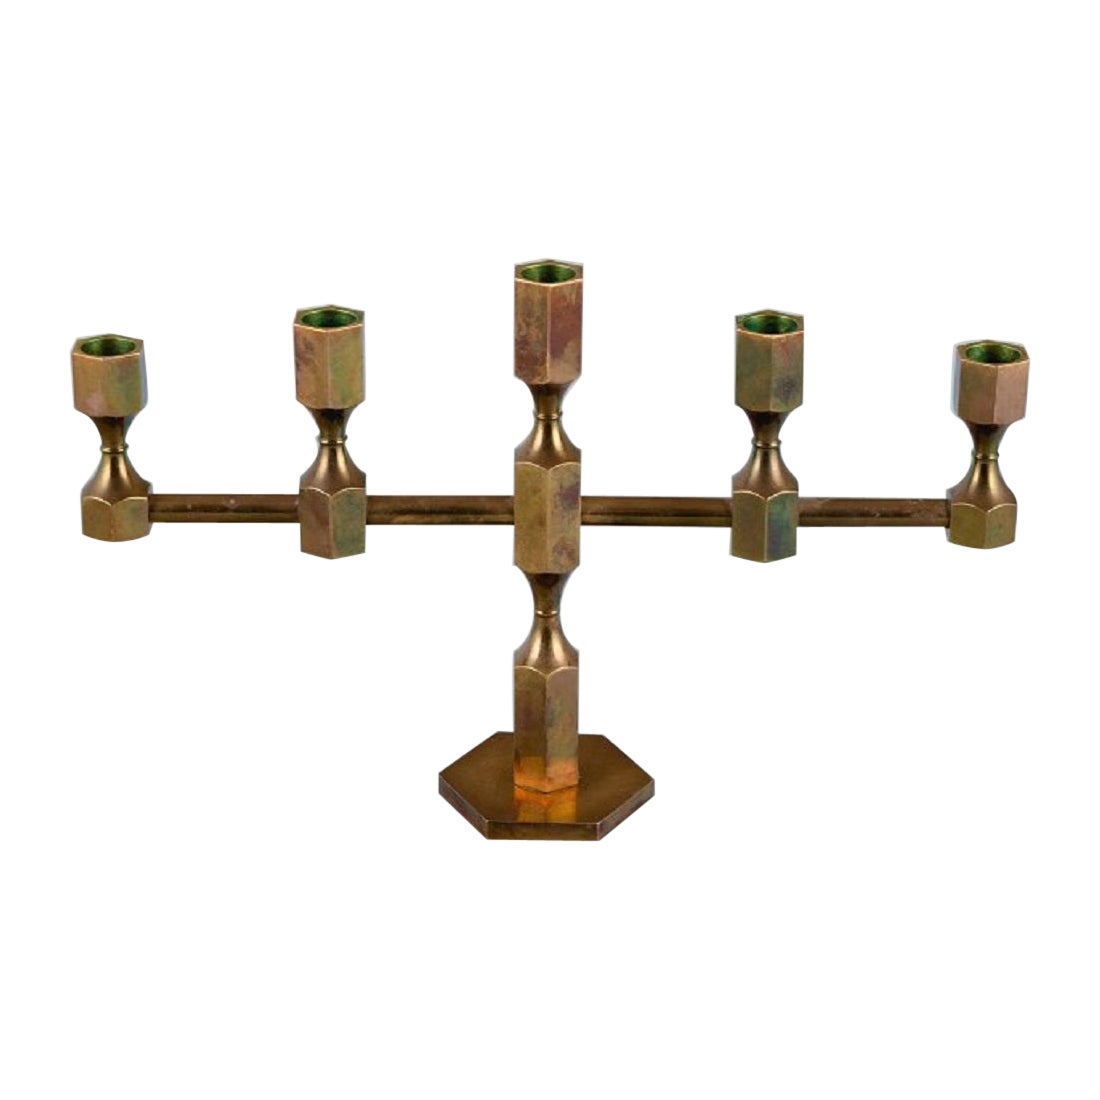 Gusum, Metallslöjd, Brass Candlestick for Five Candles, Swedish Design